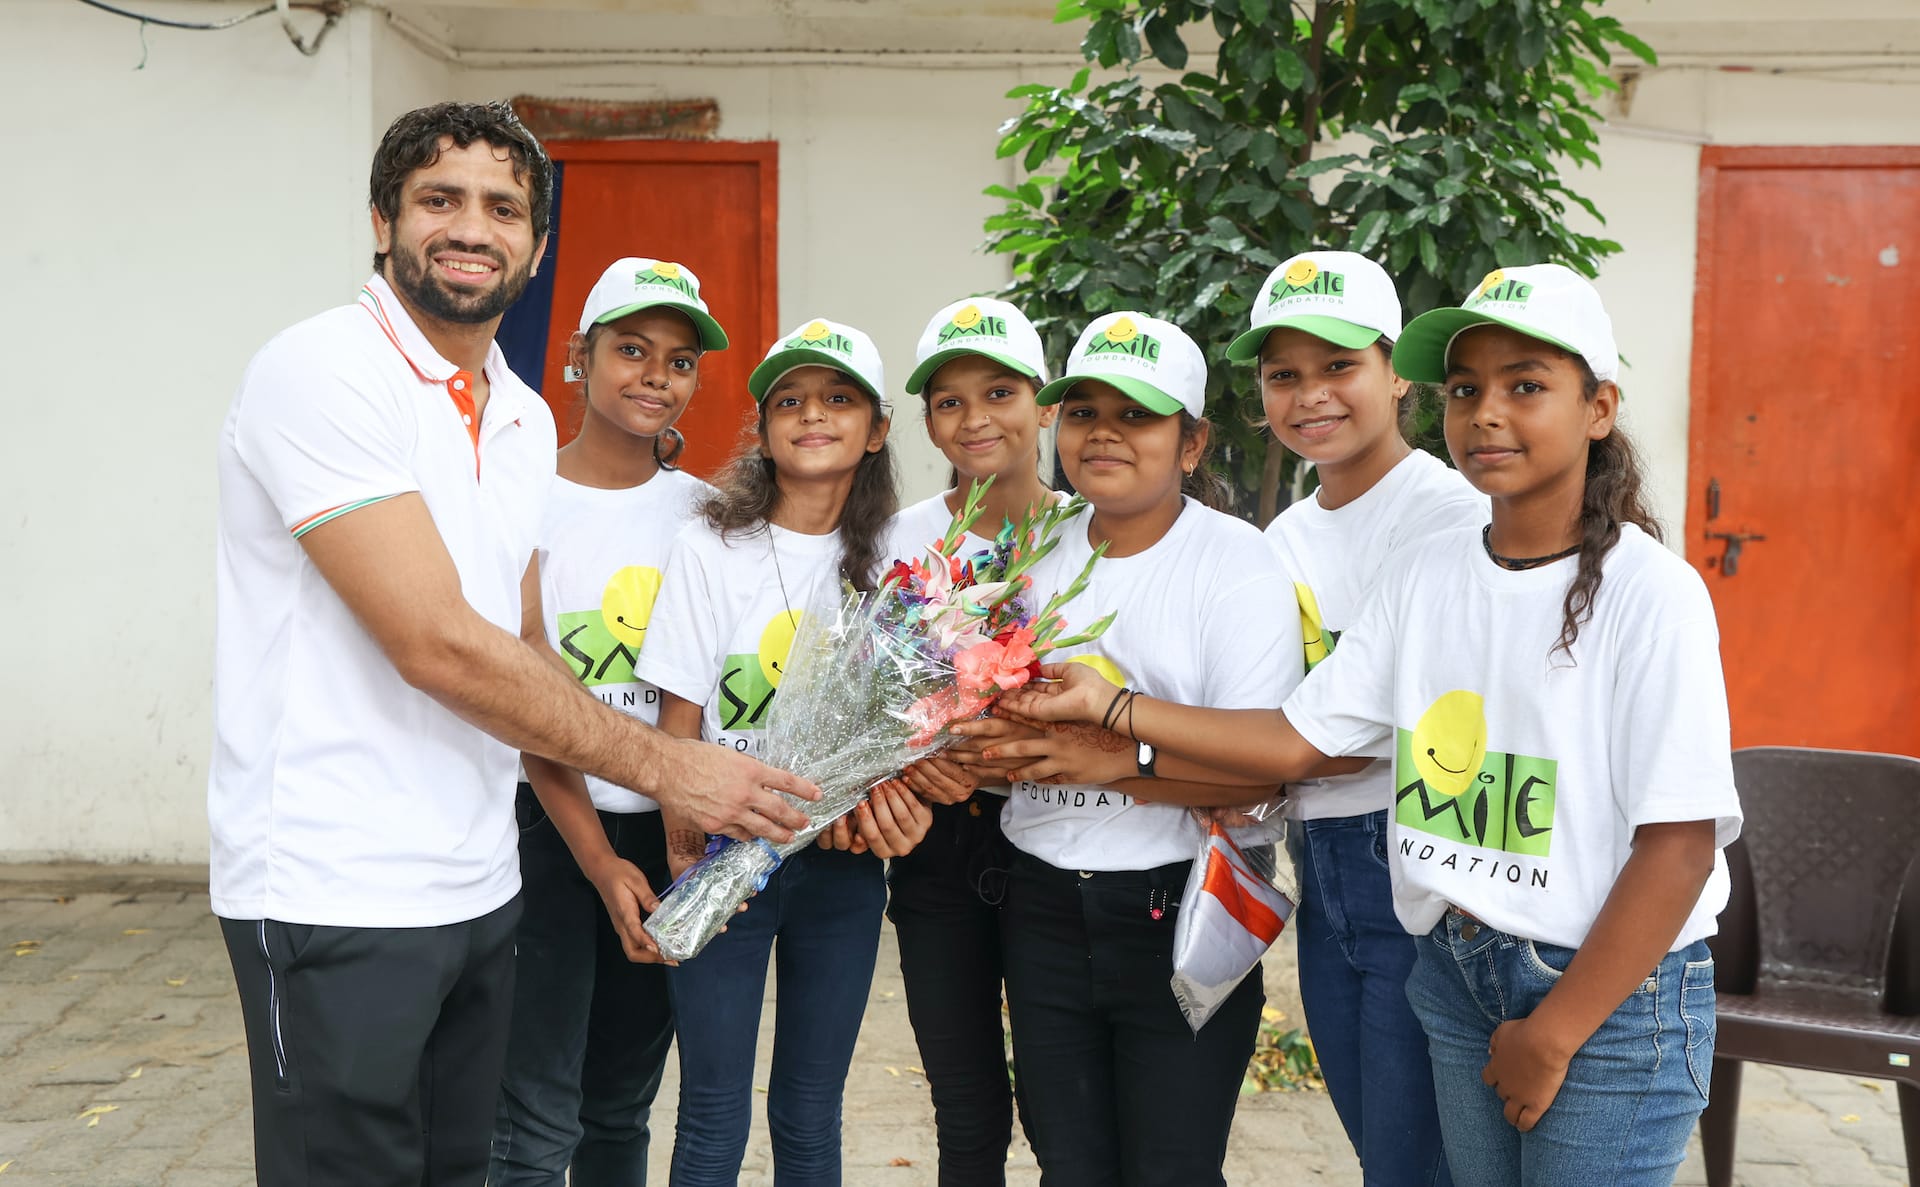 Wrestler Ravi Dahiya joins Smile Foundation’s efforts to promote Children’s Education